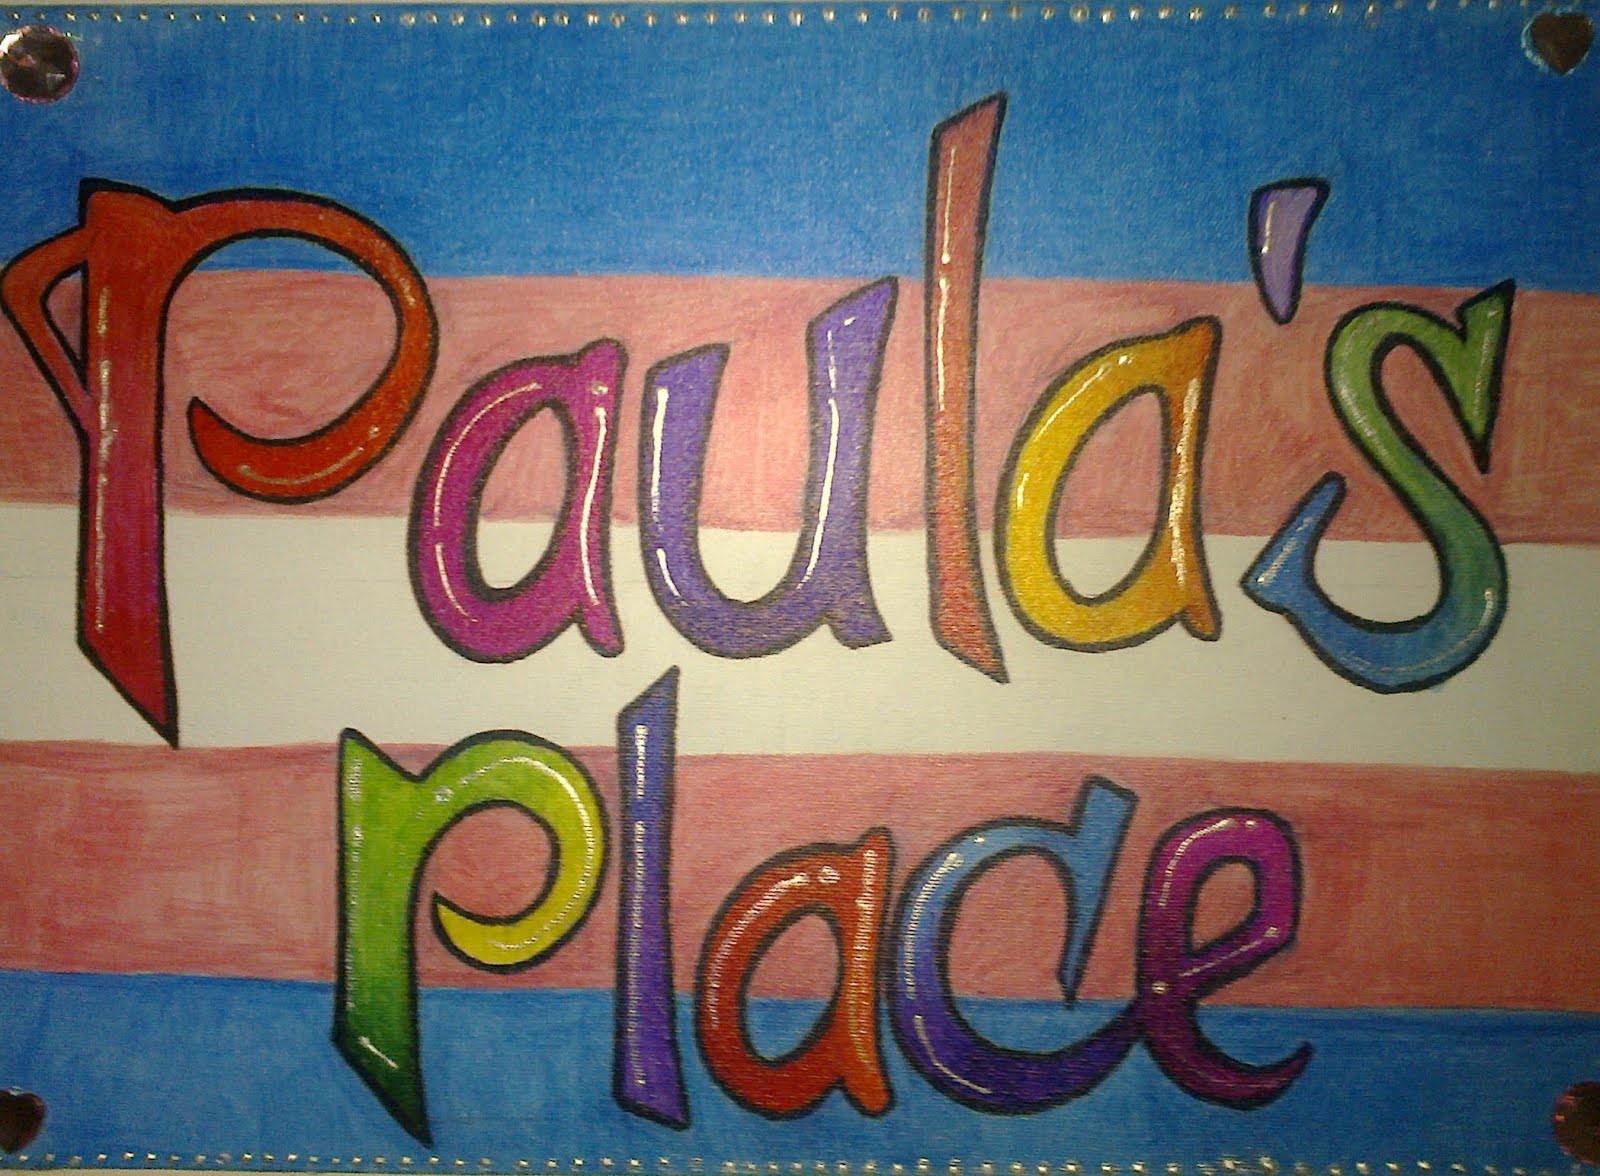 Paula's Place